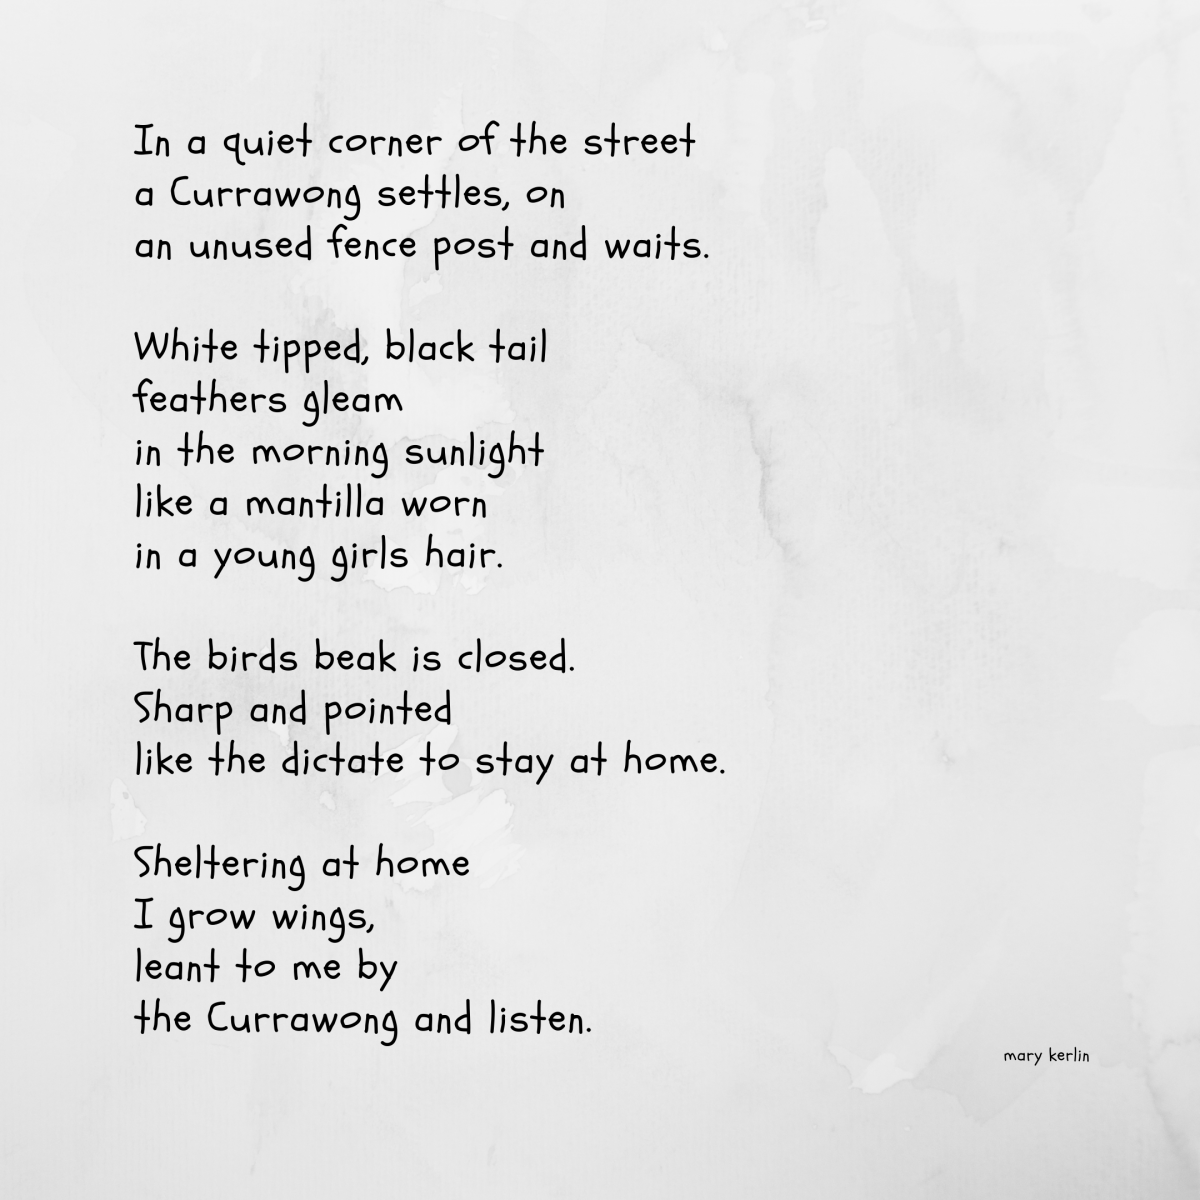 In a quiet corner of the Street poem